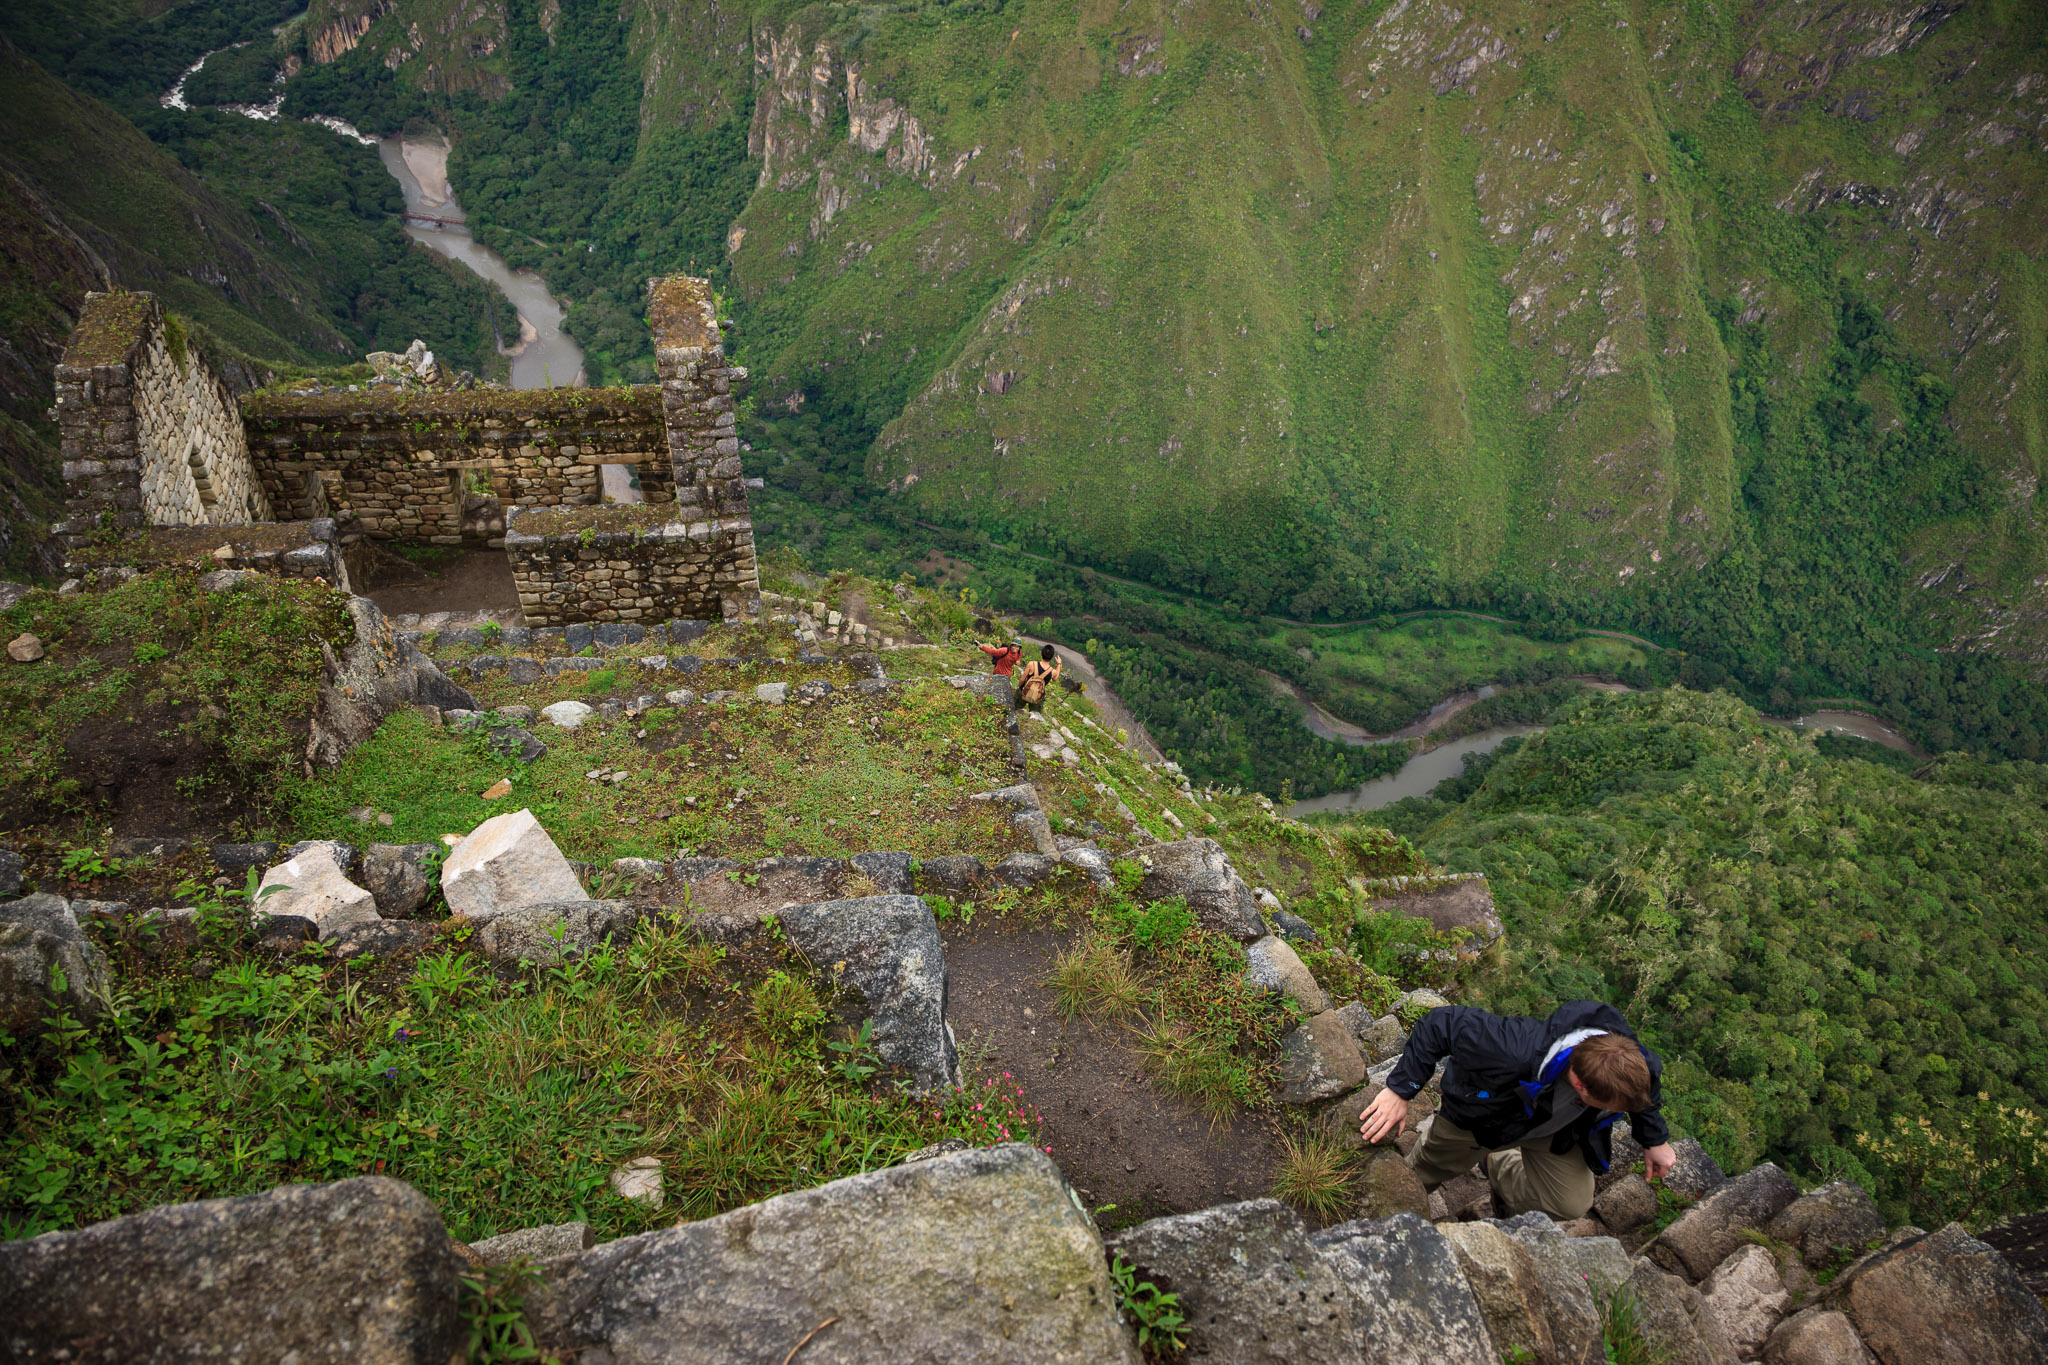 Incredibly steep climb up Wayna Picchu